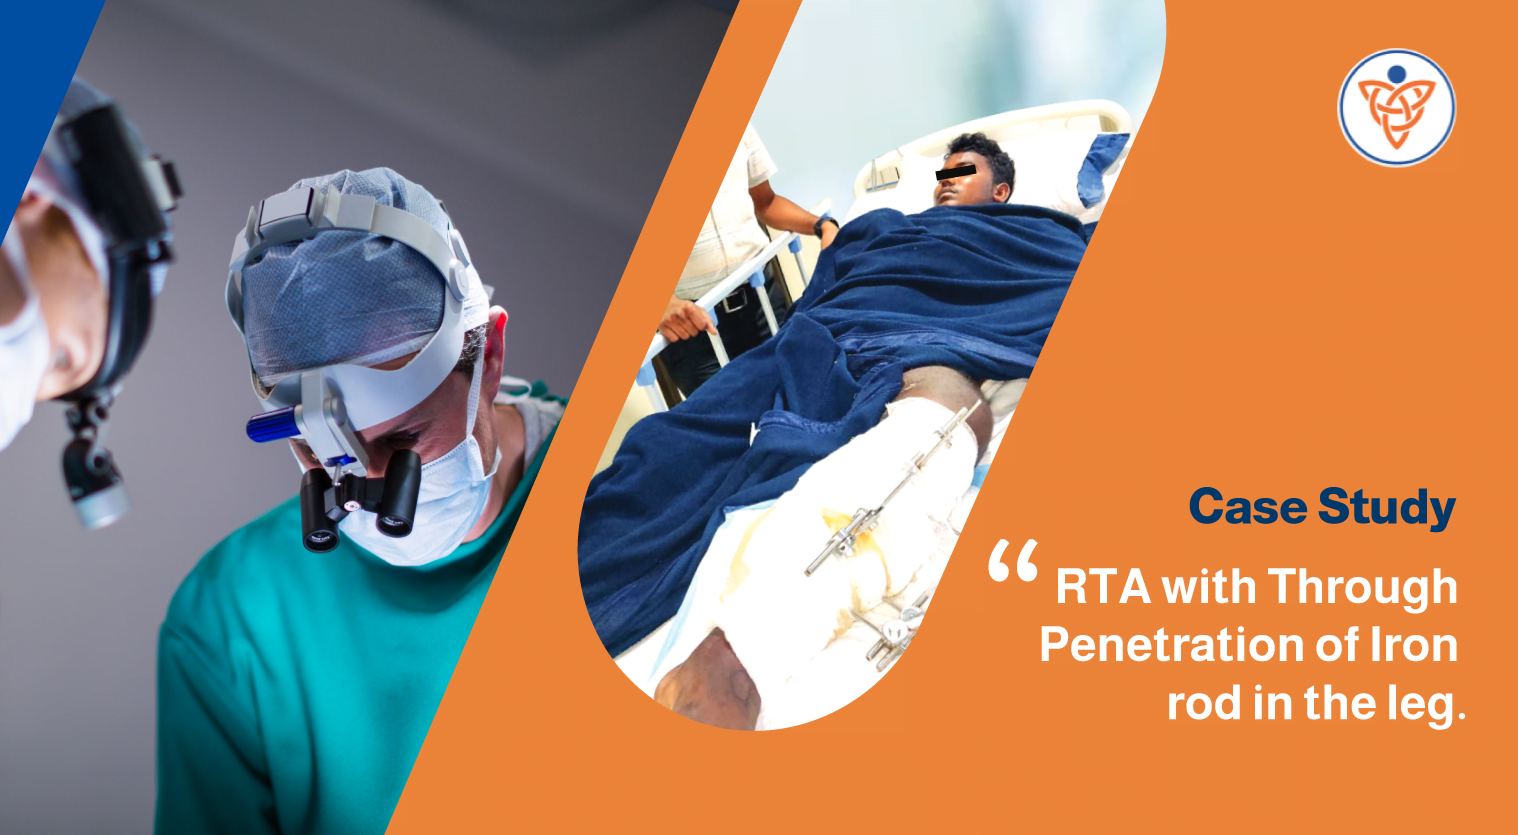 Case study - RTA with Through and Through Penetration of Iron rod in the leg | VishwaRaj Hospital